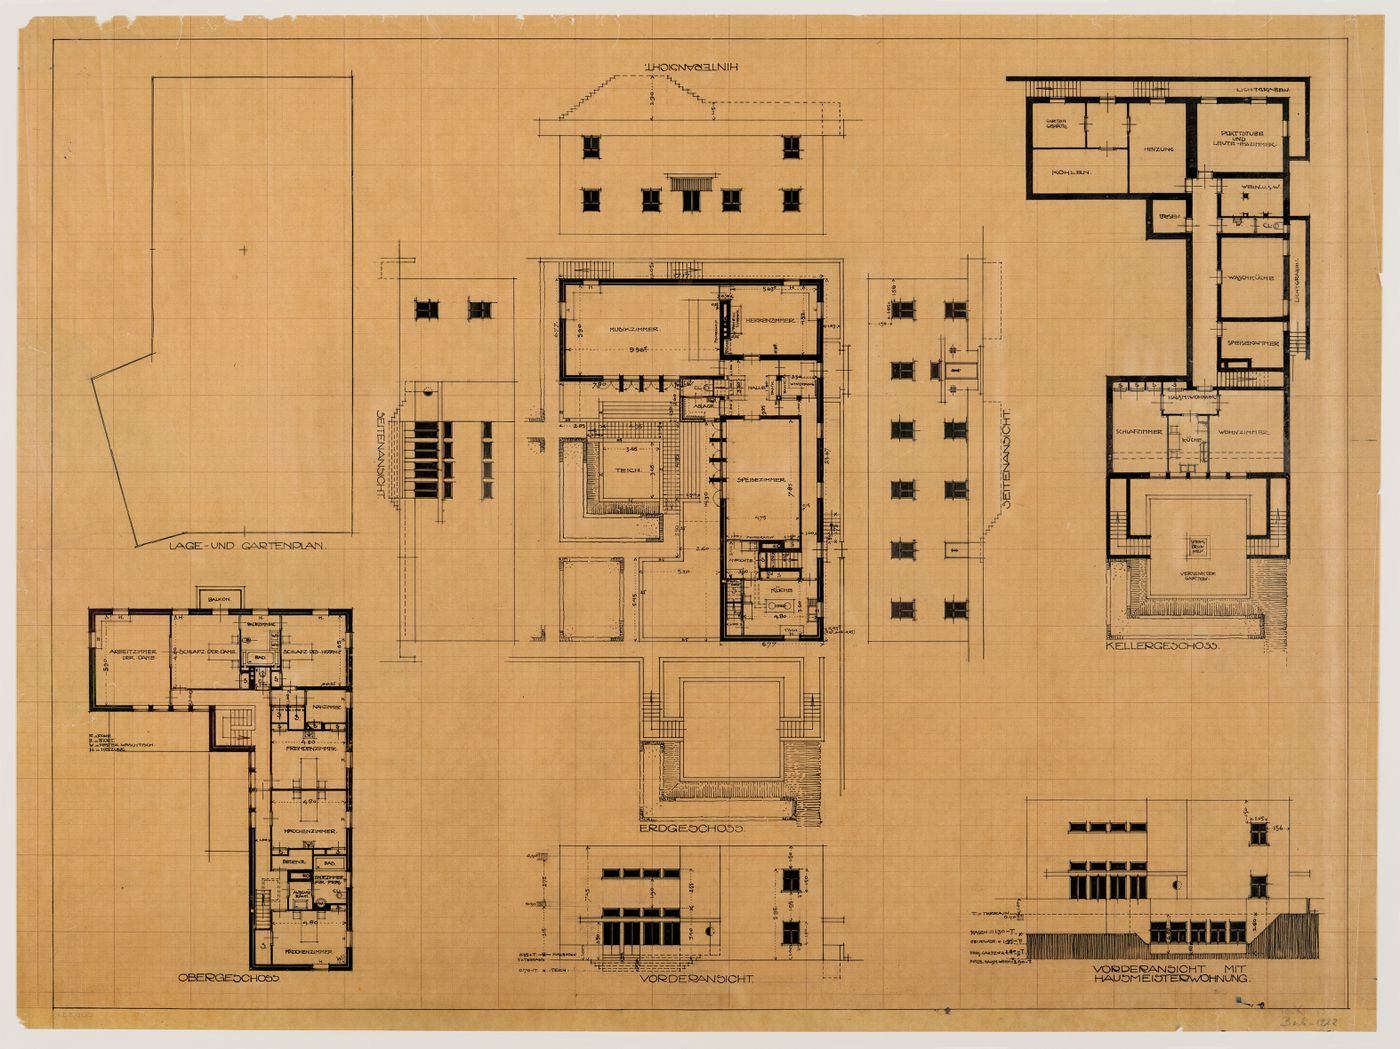 Site plan, plans and elevations for Villa Kallenbach, Grunewald, Berlin, Germany